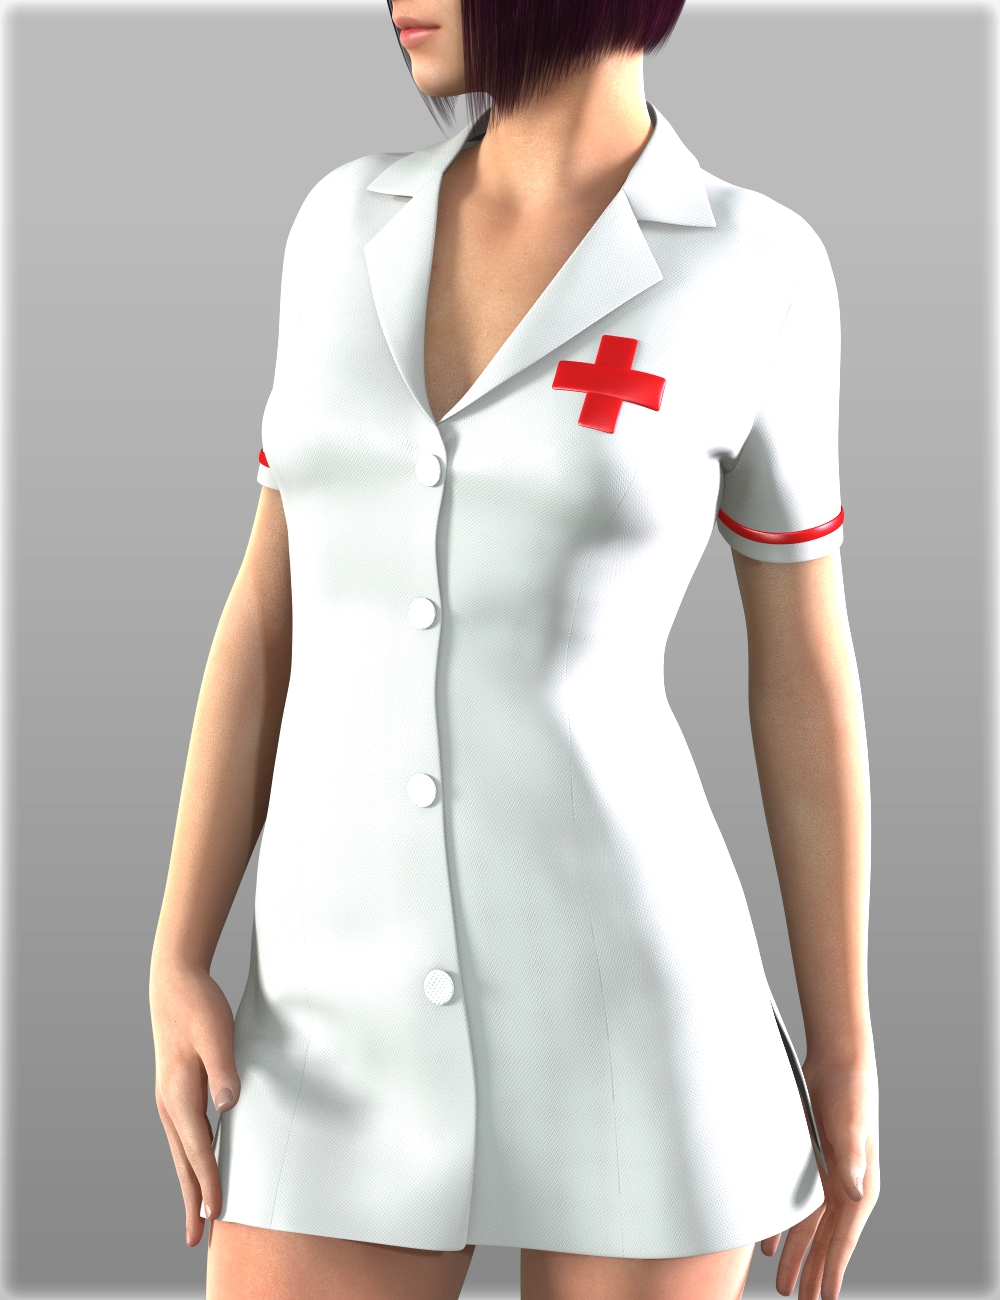 sexy nurse uniforms Cheap Sale - OFF 70%